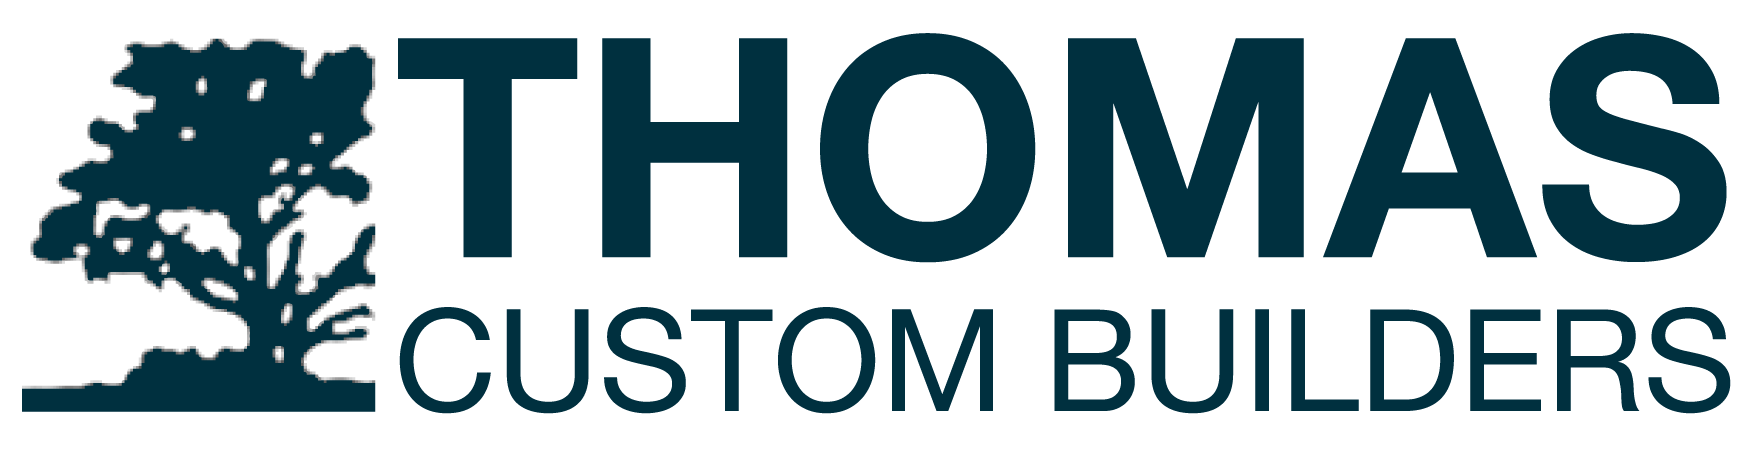 Thomas Custom Builder Logo